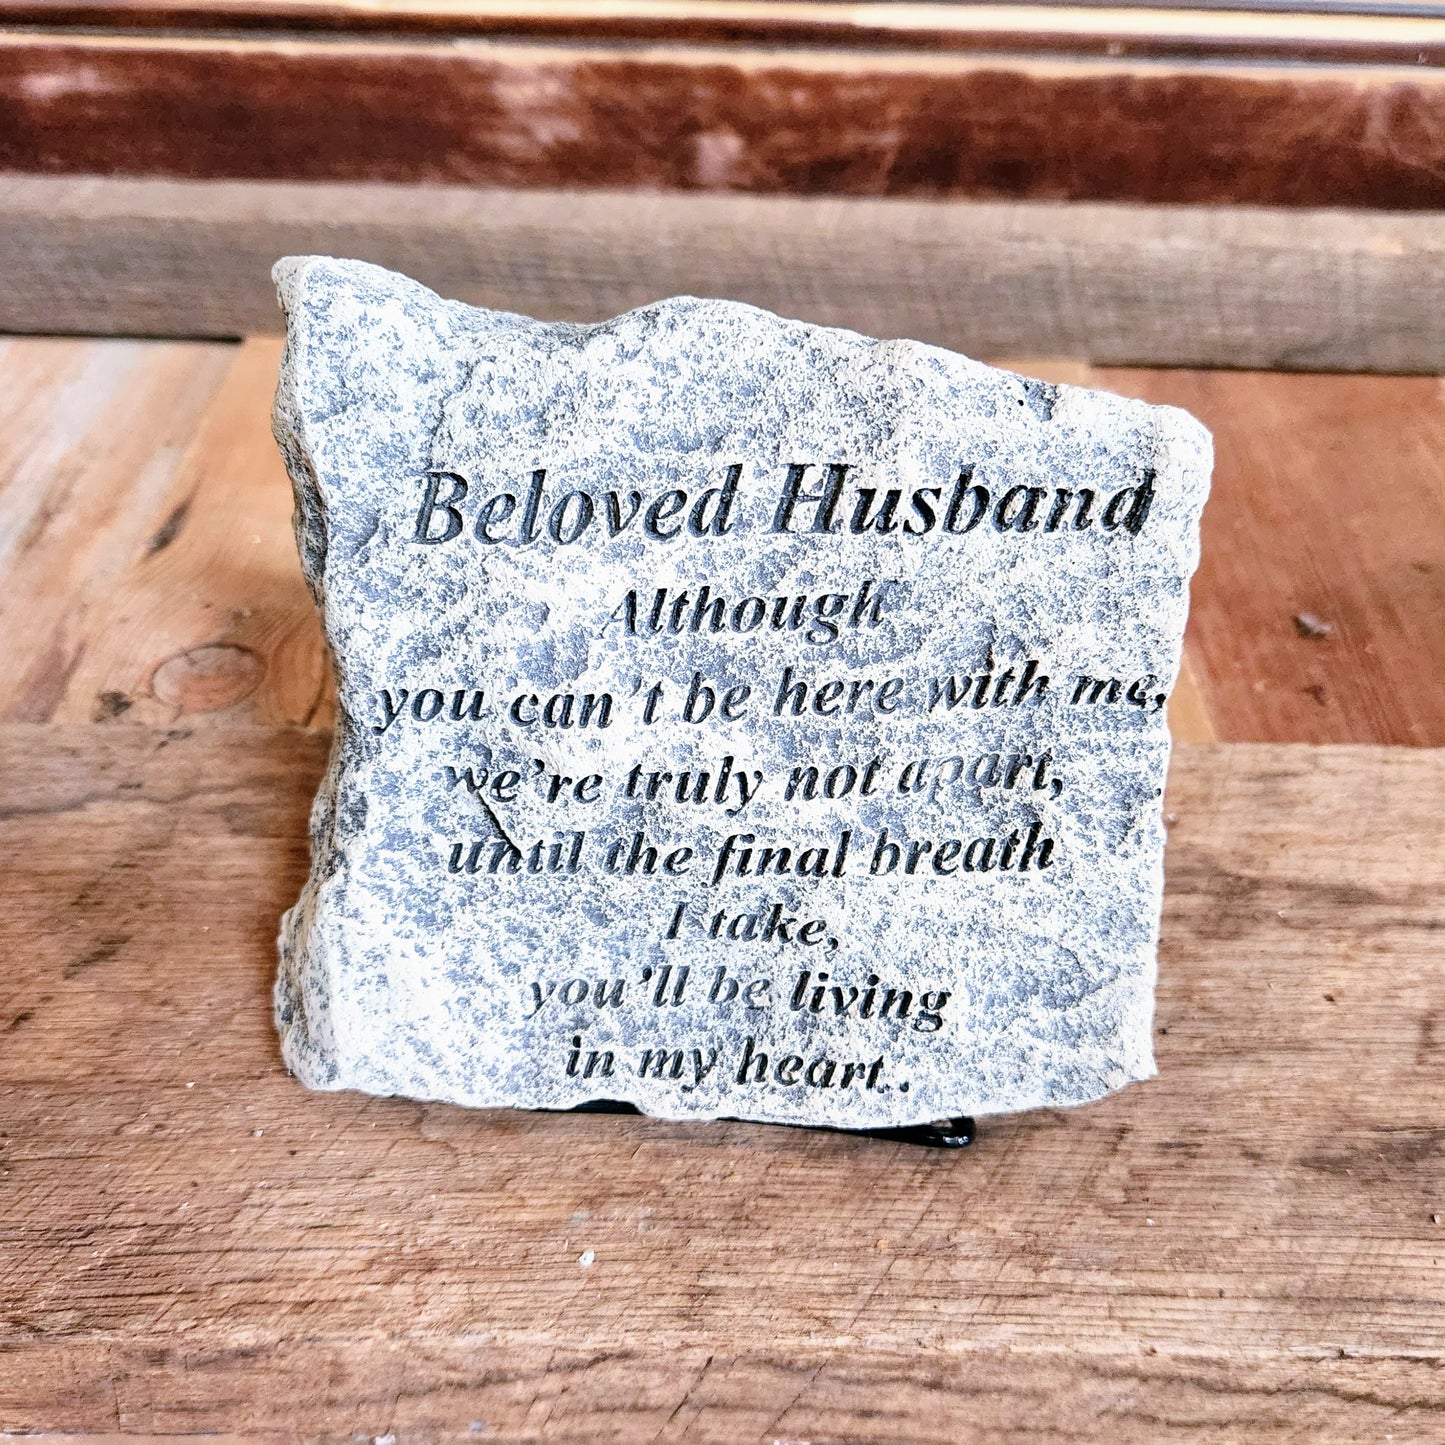 "Beloved Husband" Small Memorial Plaque